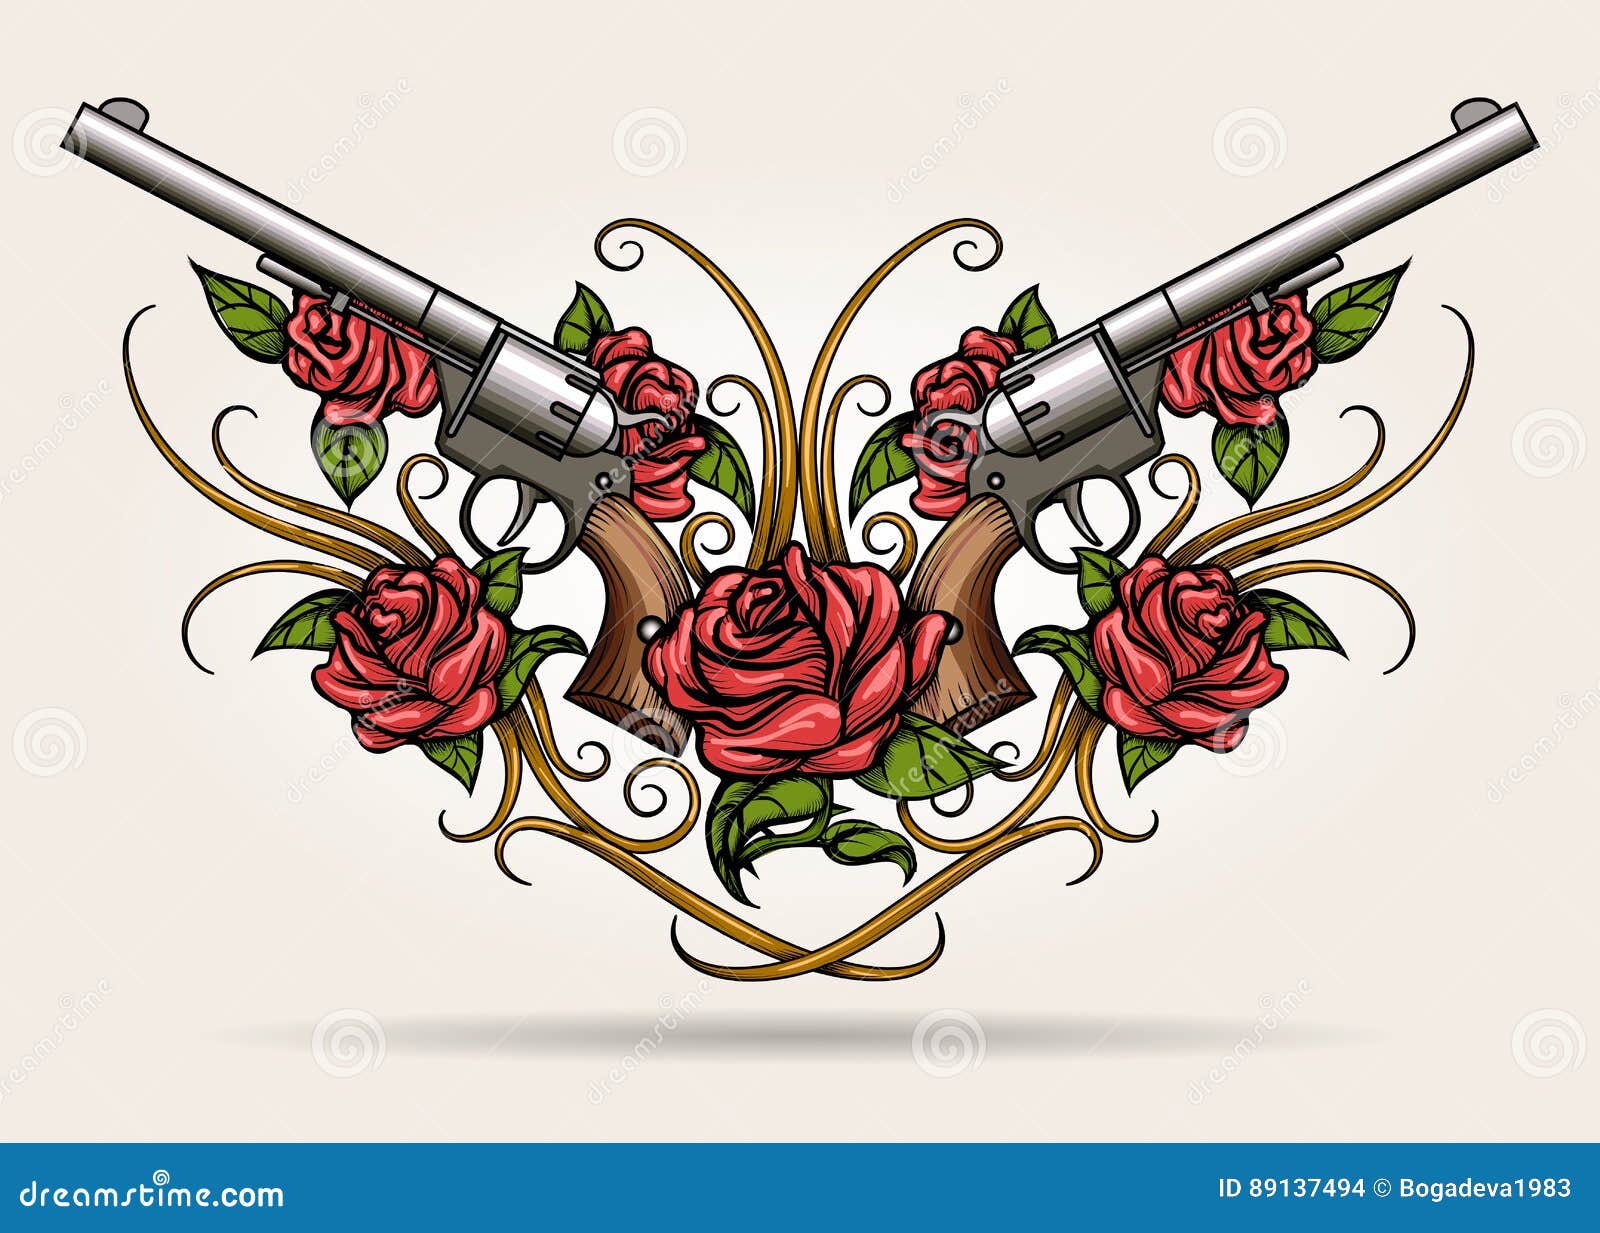 Guns N Roses Tattoo Design HD Png Download  Transparent Png Image   PNGitem